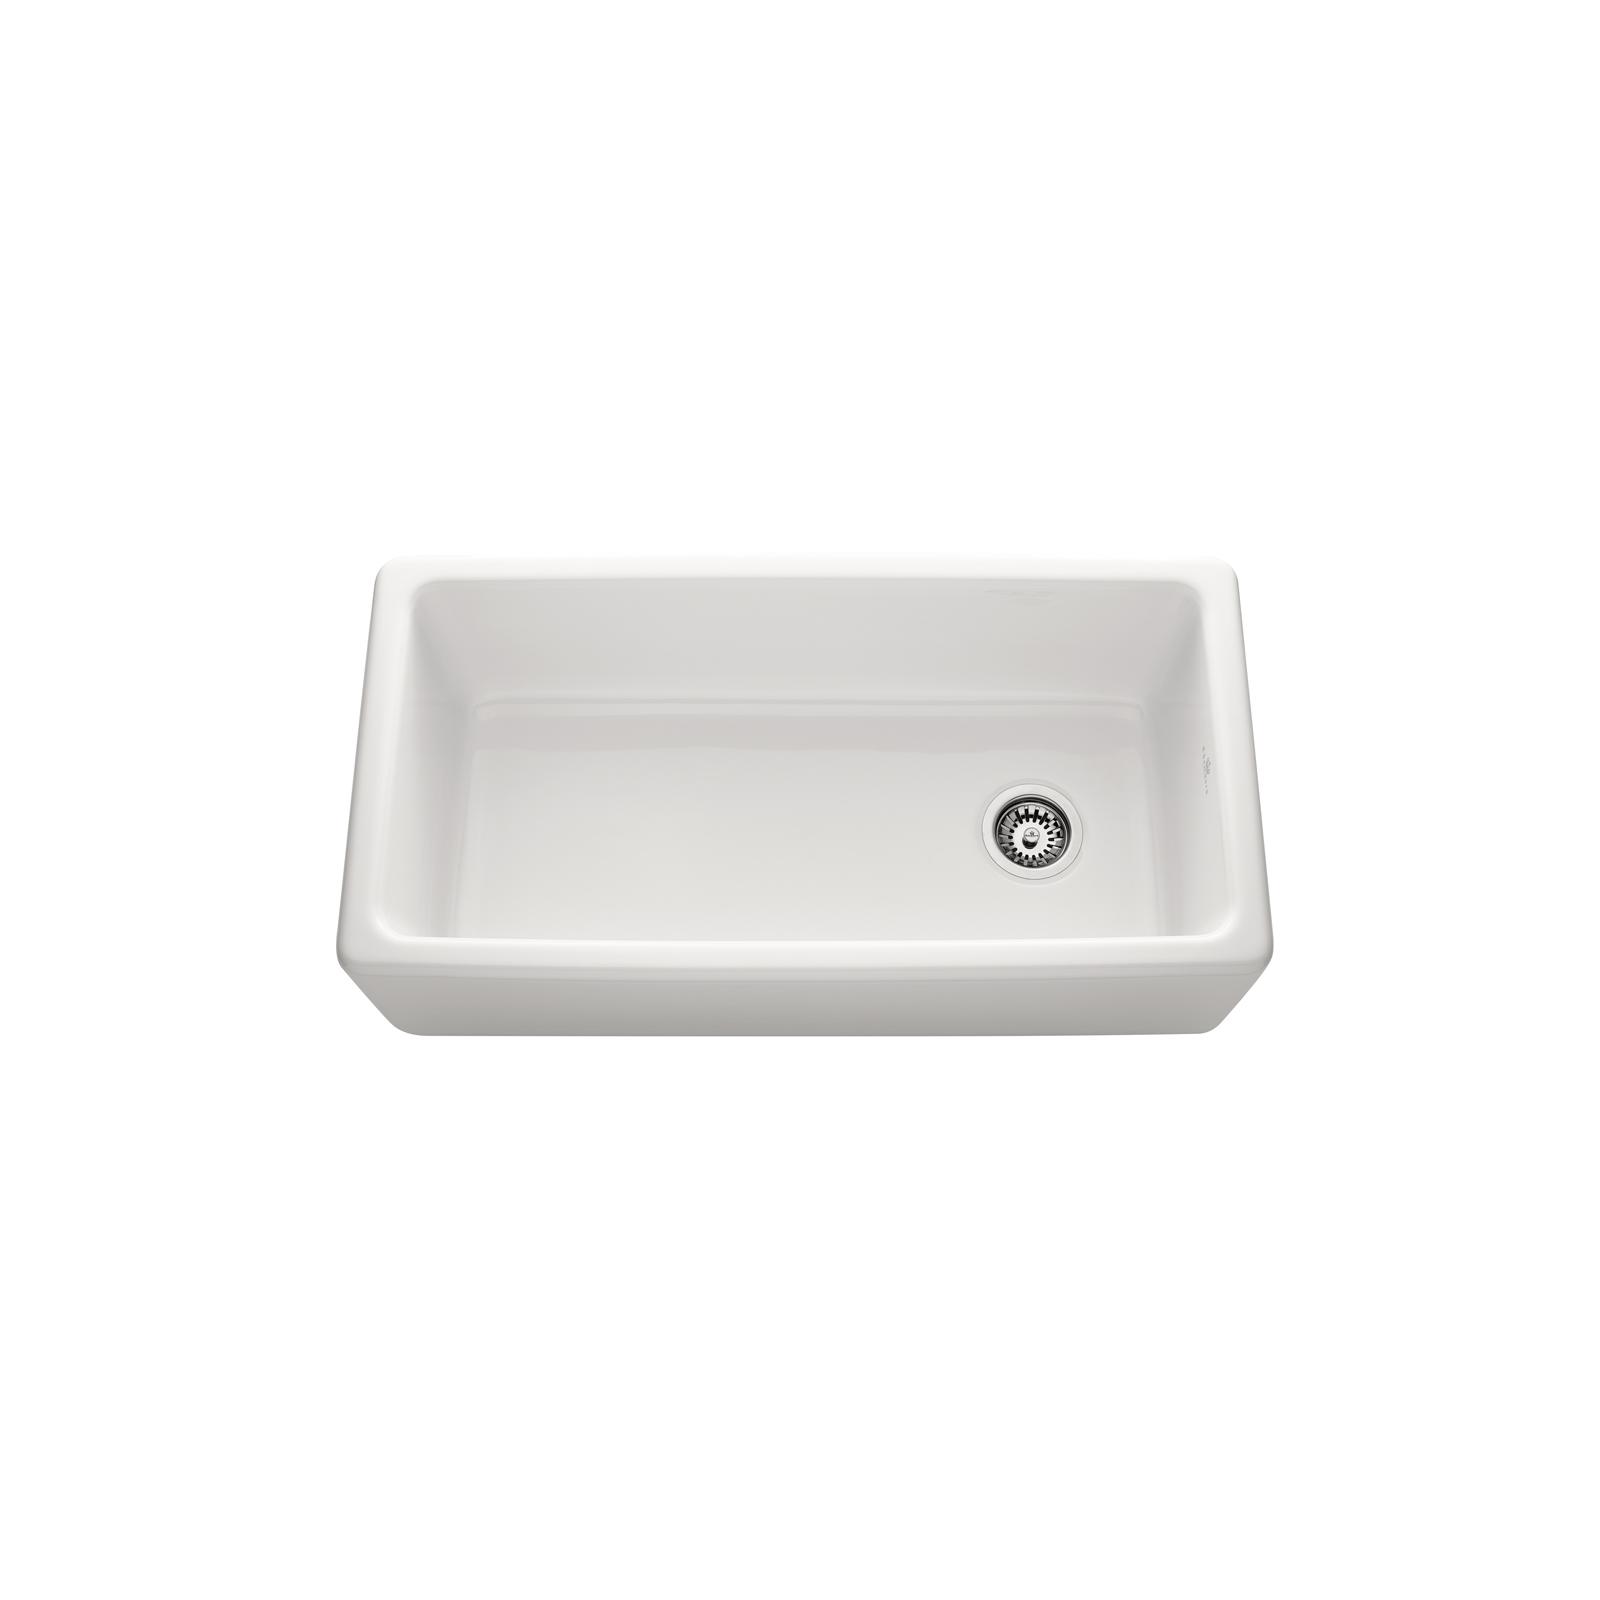 High-quality sink Philippe III - single bowl, ceramic